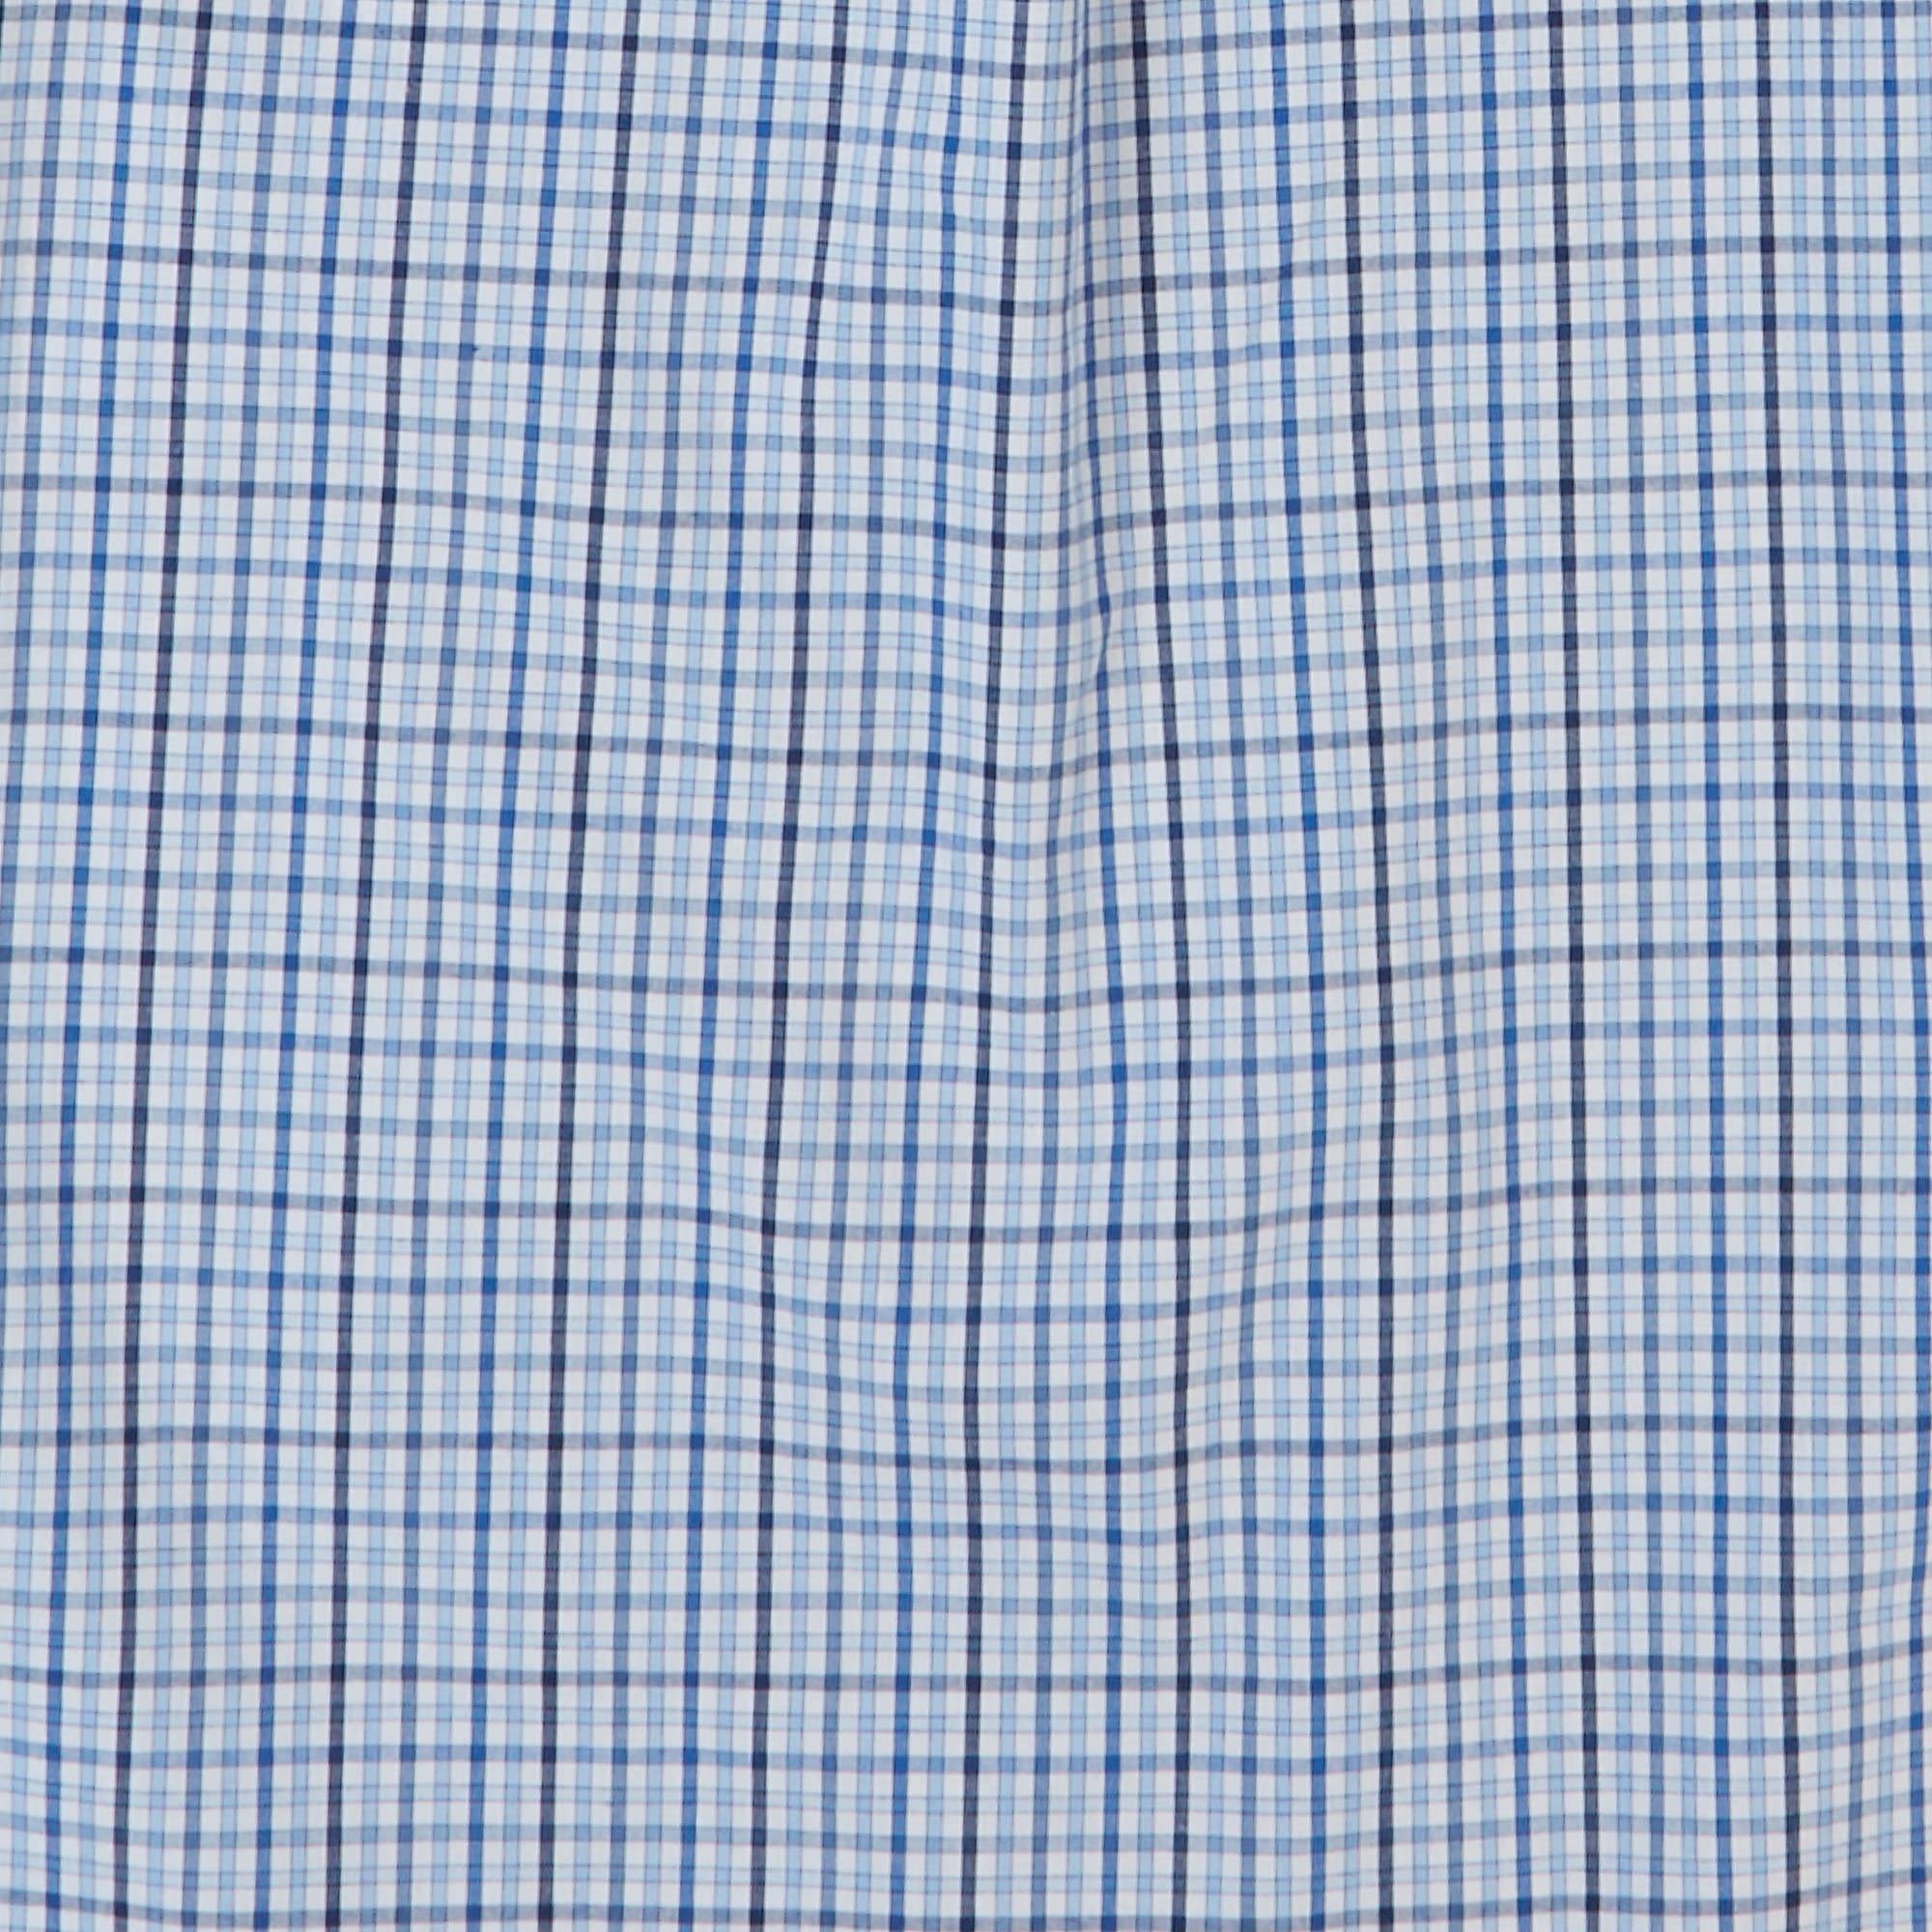 IZOD Mens Woven Stripe Button-Up Long Sleeve Shirt Medium Blue/White